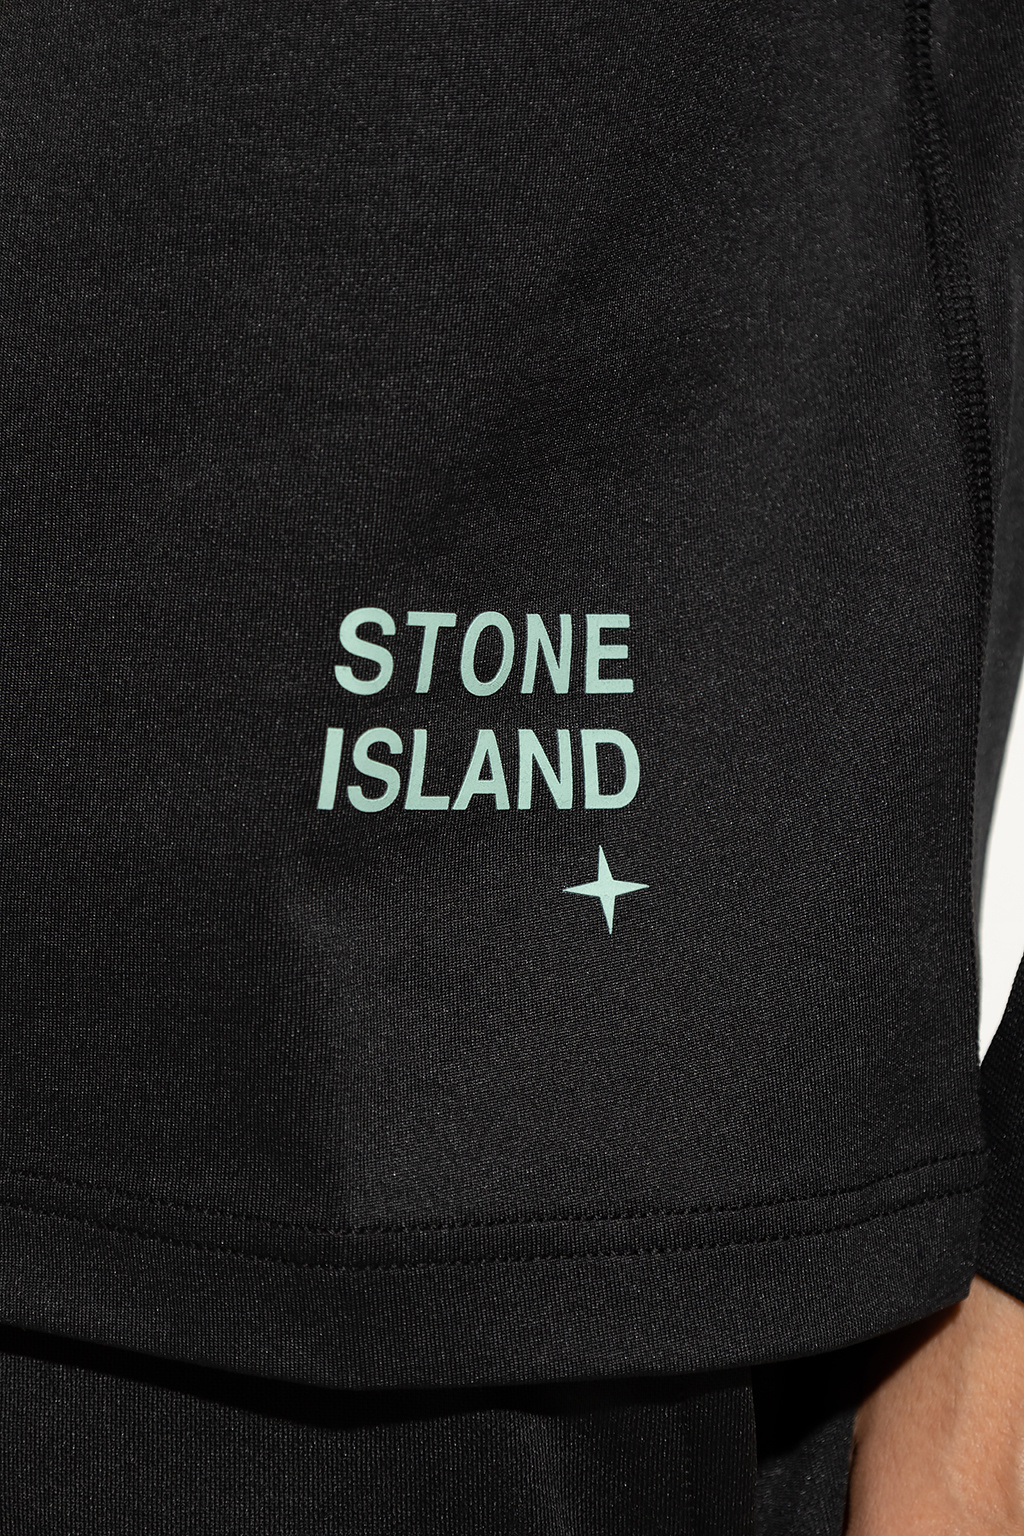 Stone Island women clothing T Shirts